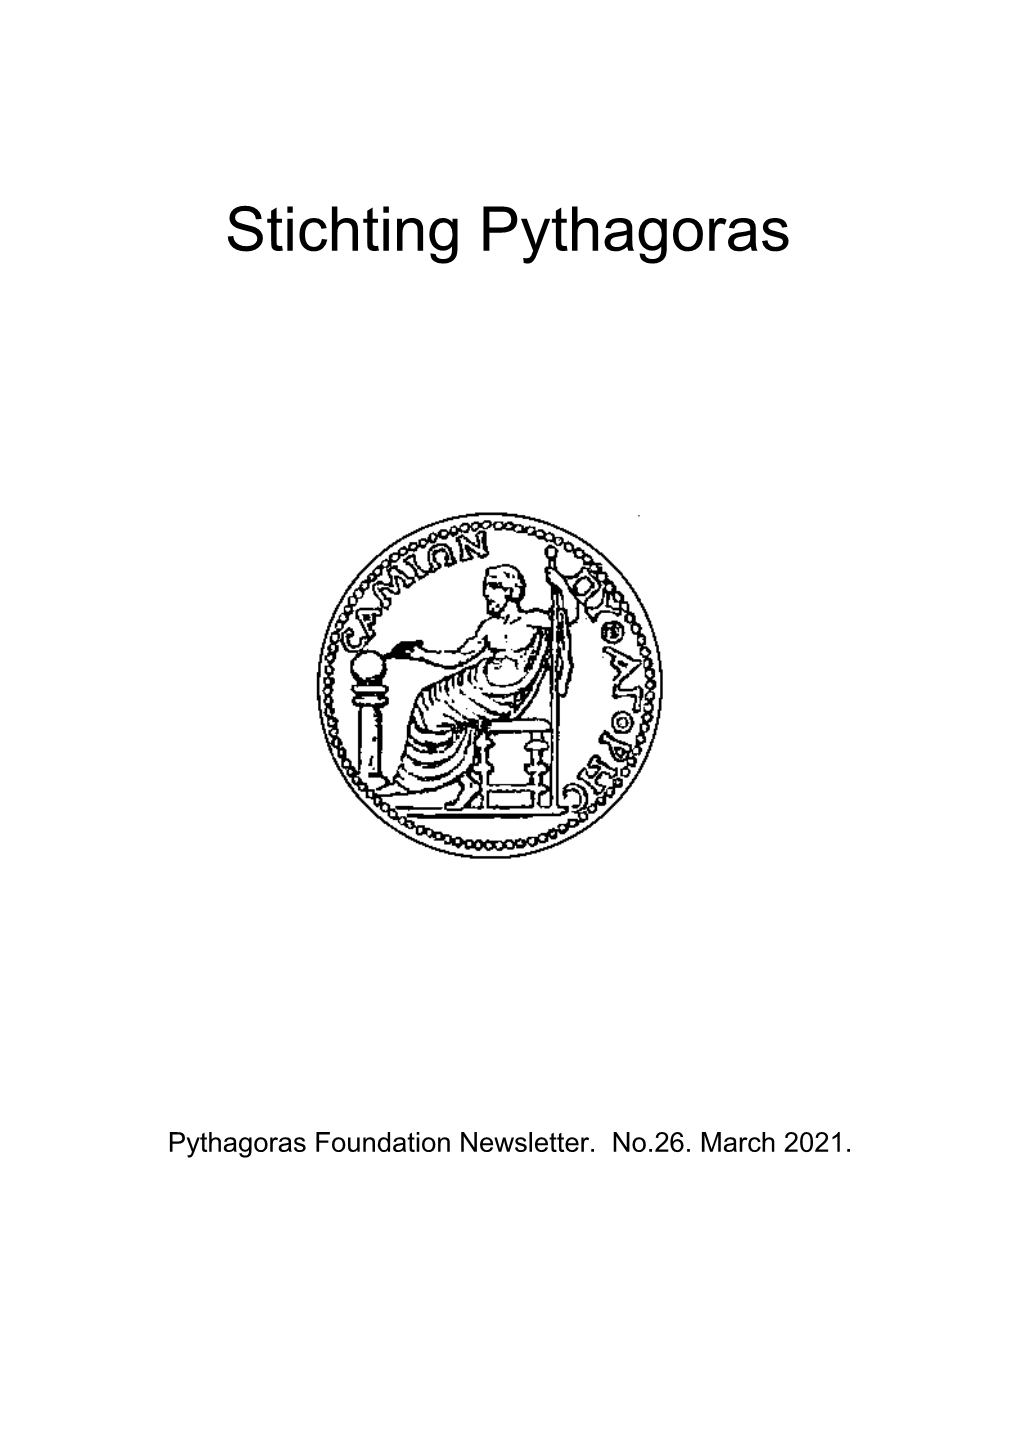 Pythagoras Foundation Newsletter 26 2021